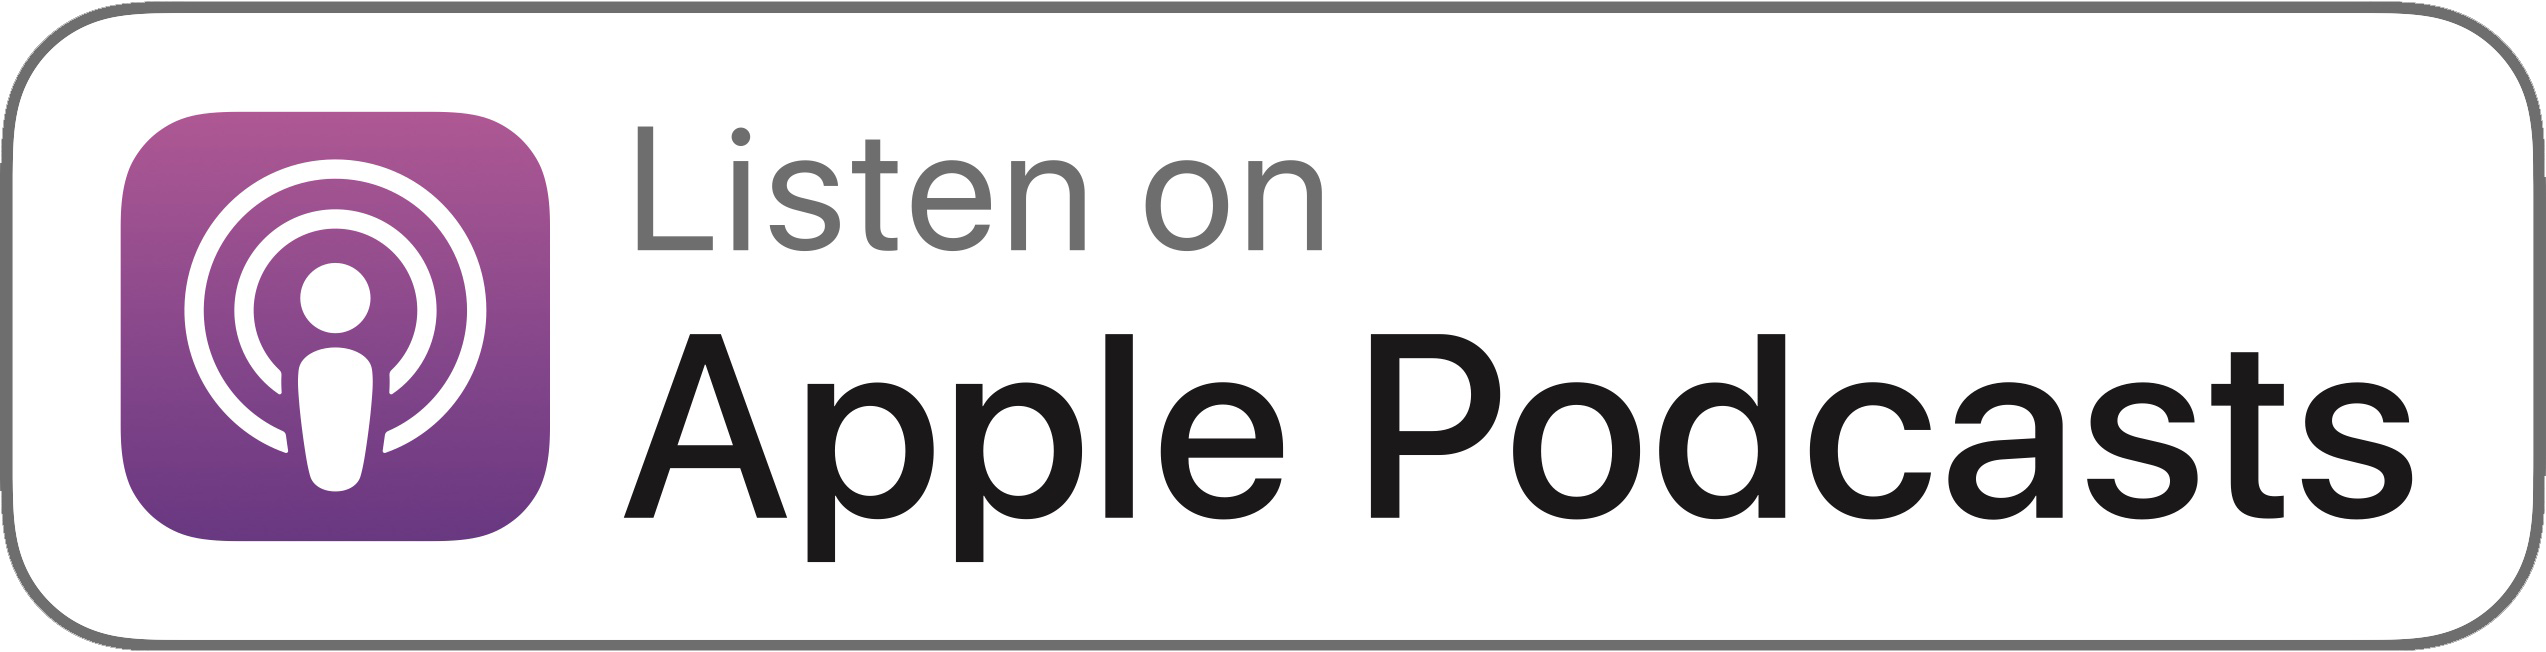 Listen on apple podcasts.